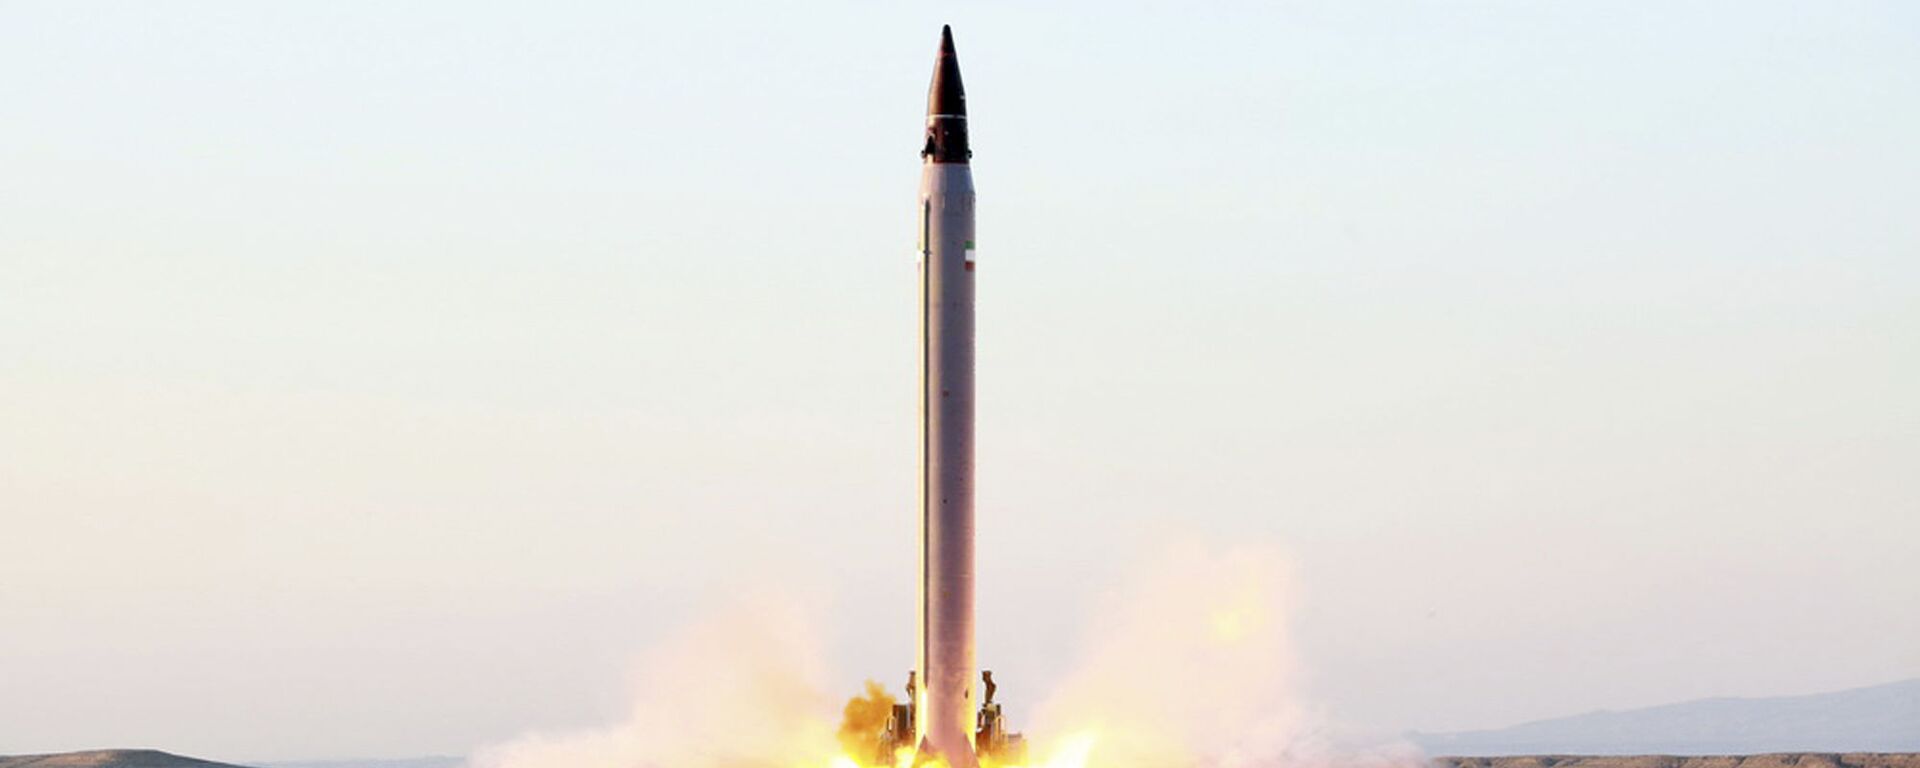 إطلاق صاروخ بالستي إيراني - سبوتنيك عربي, 1920, 21.12.2021